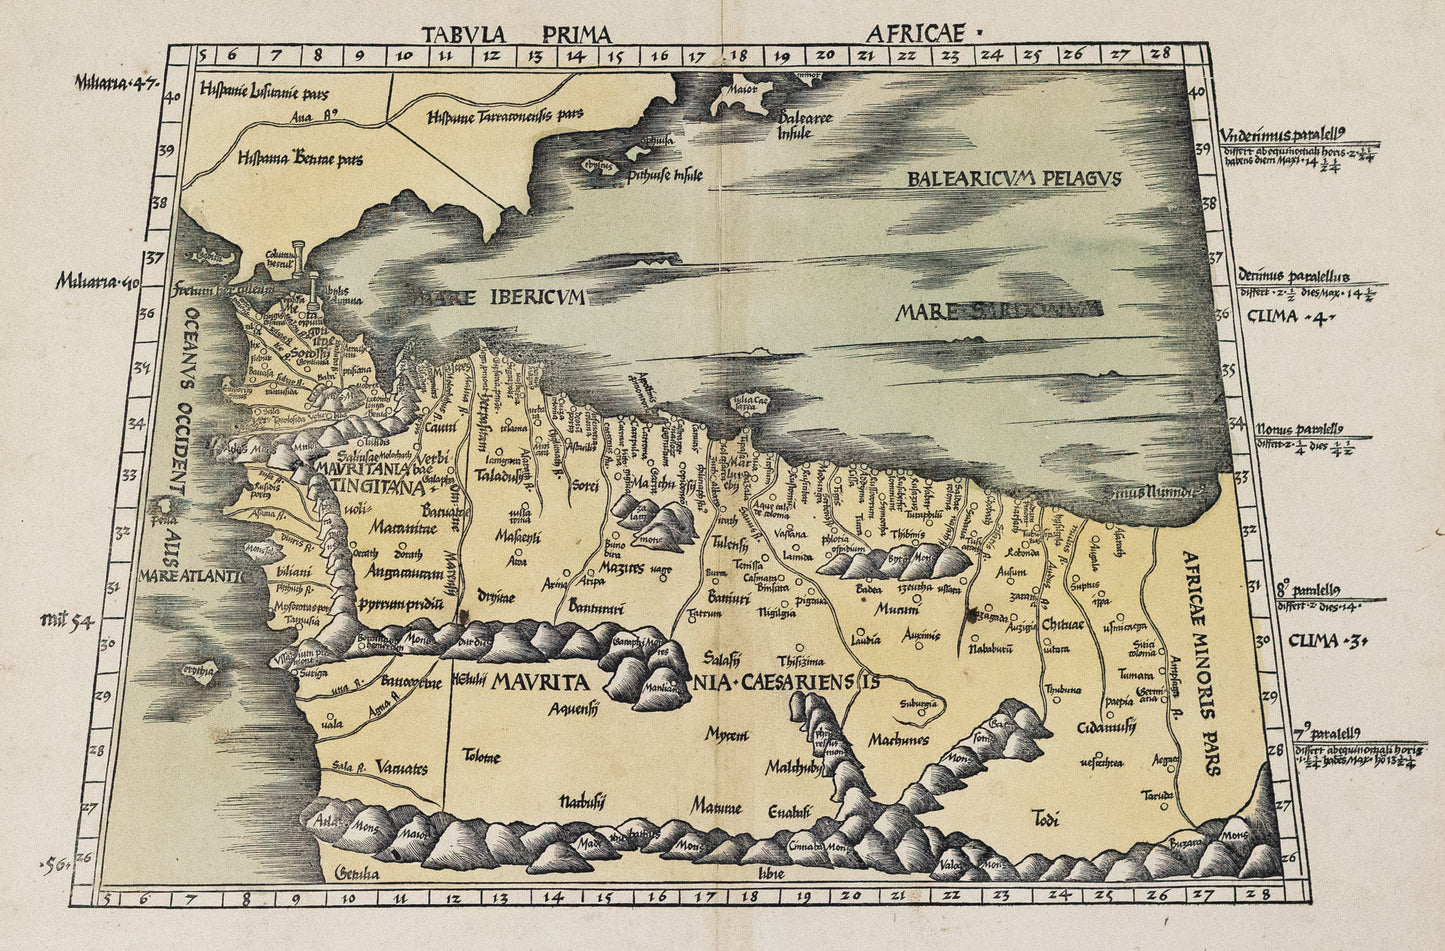 Ptomely & Waldseemuller. Tabula Prima Africa. Strasbourg: 1513